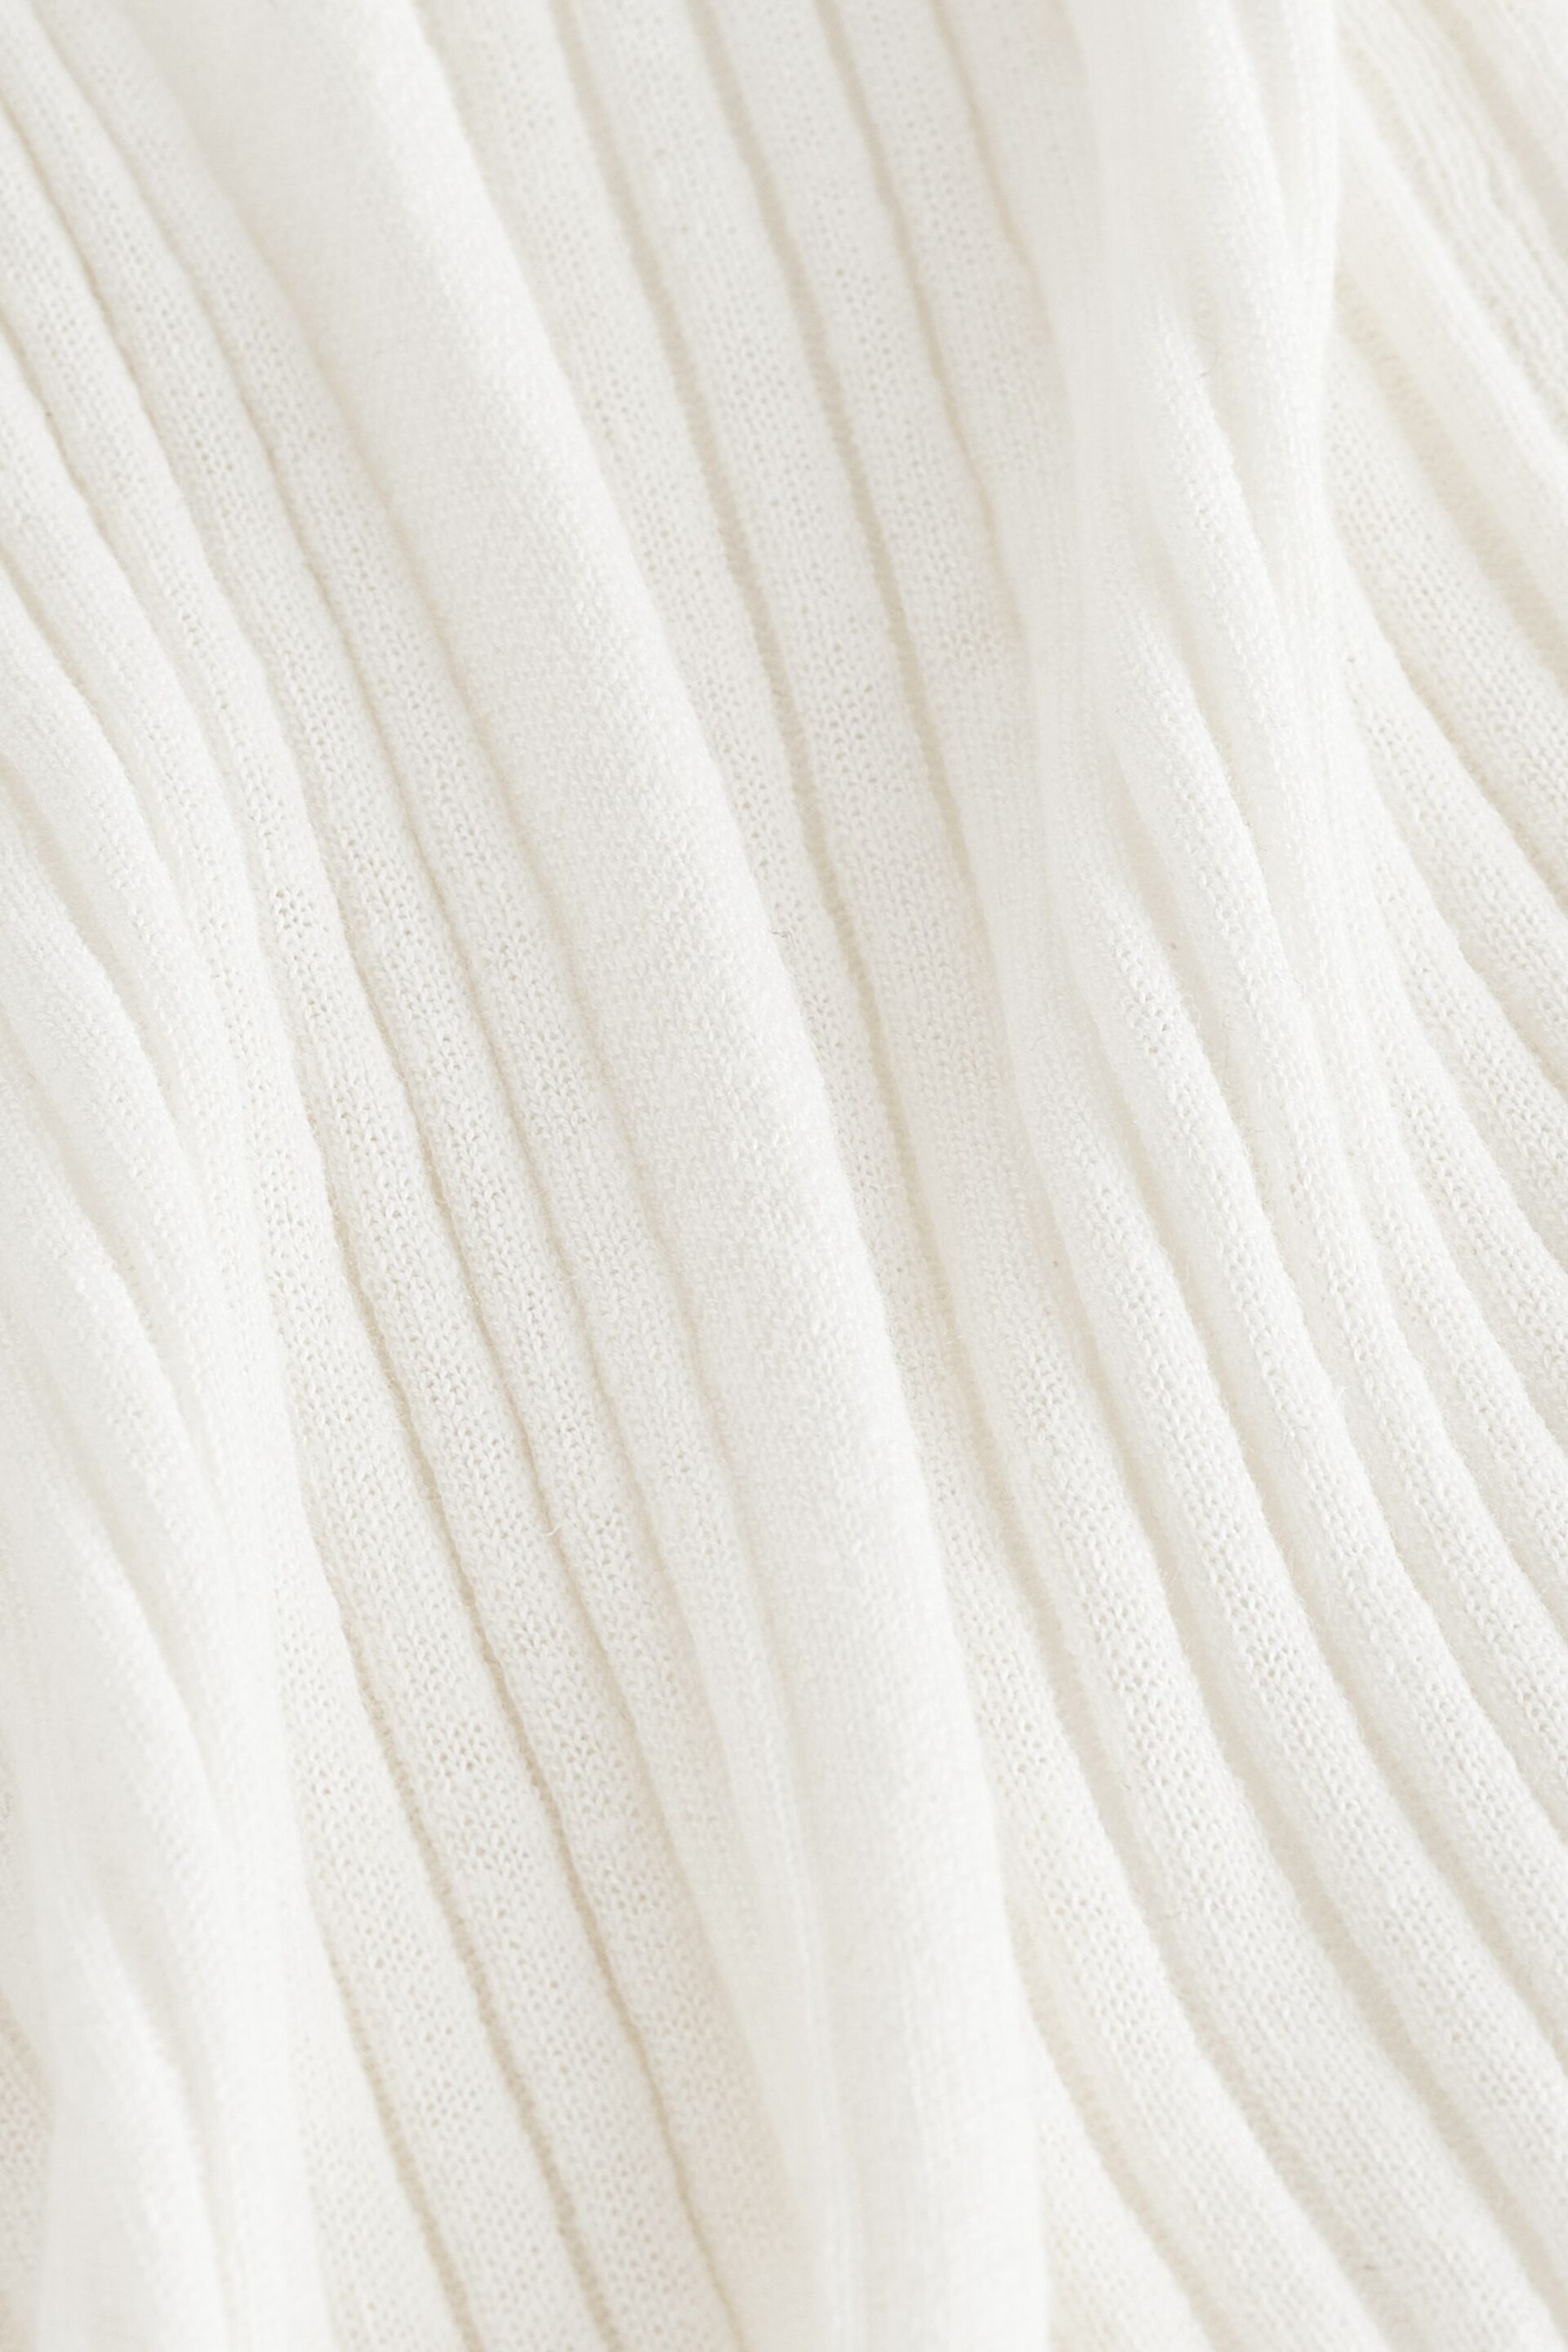 White Longine Linen Rib Cardigan - Image 6 of 6